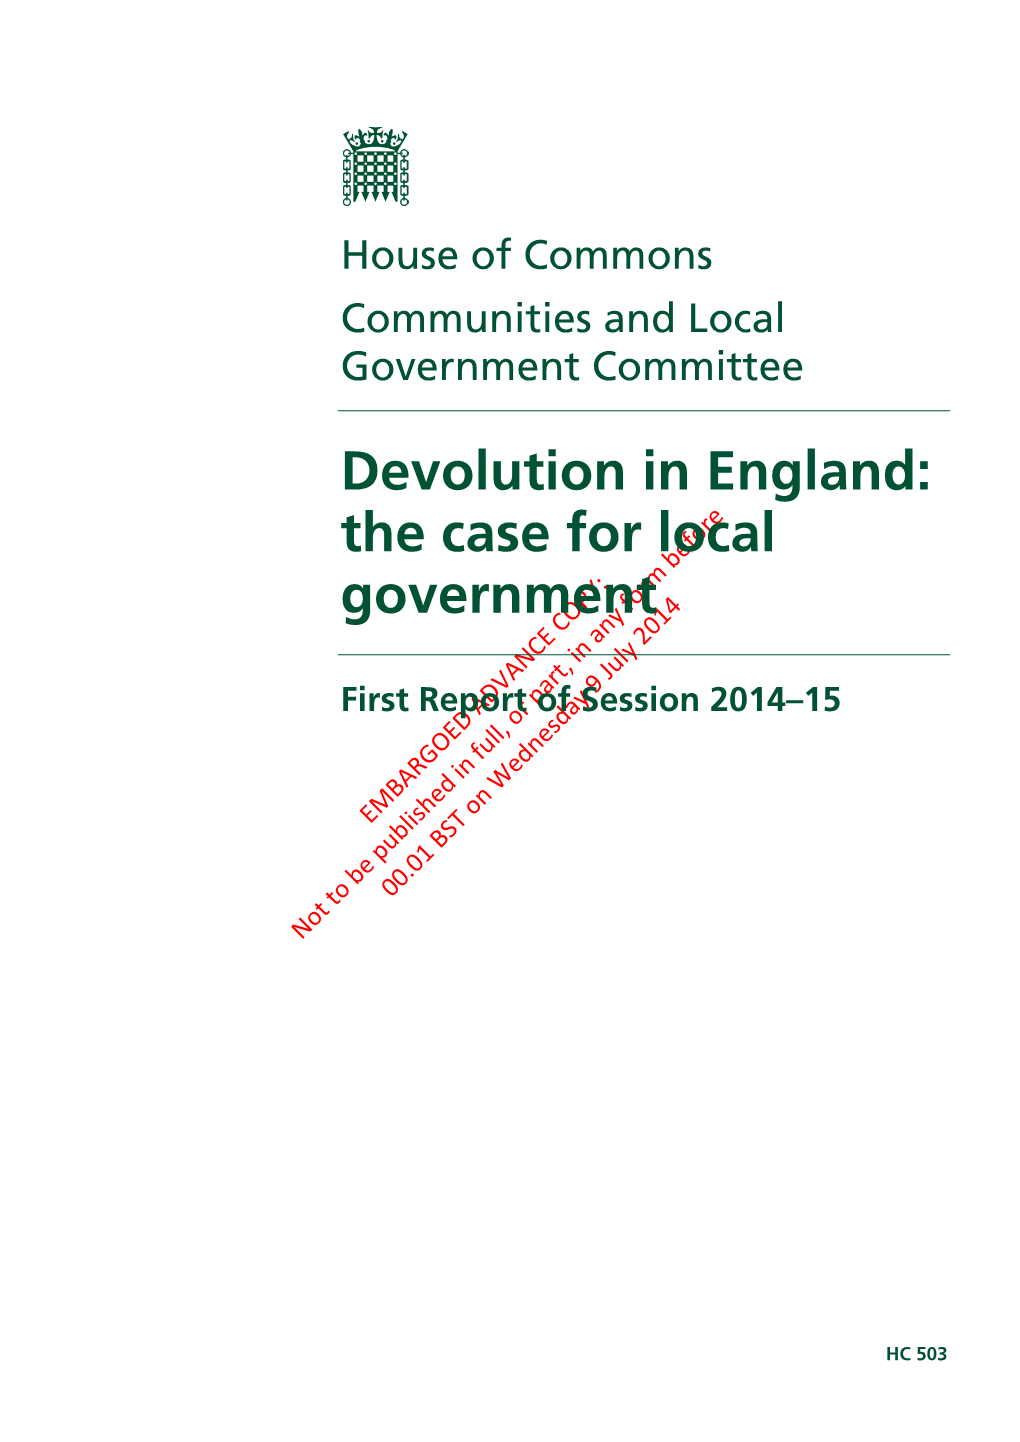 Devolution in England